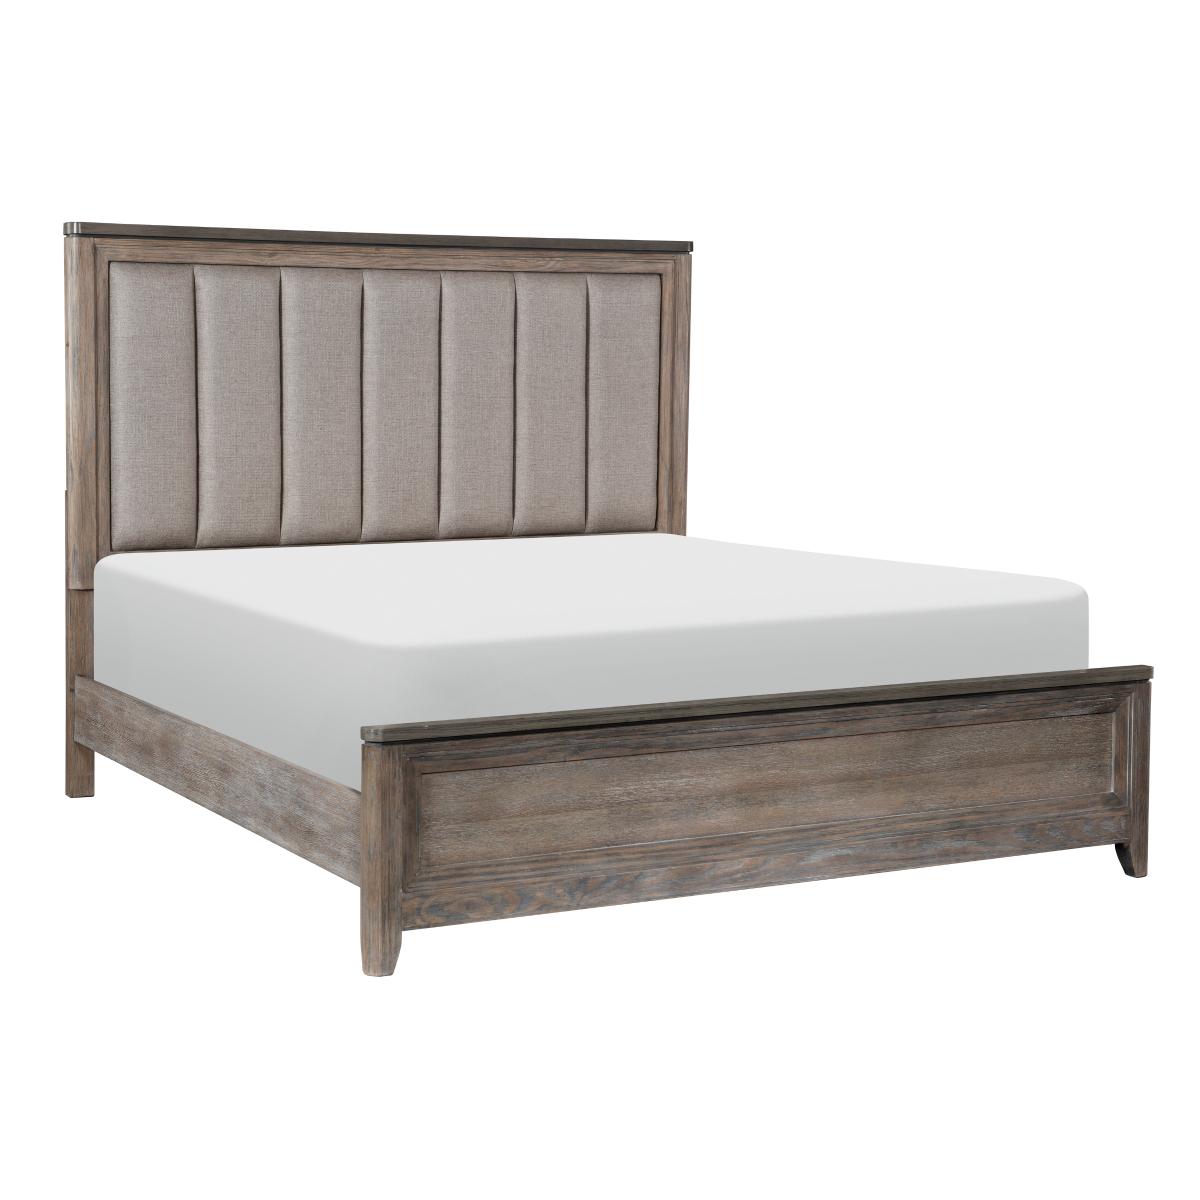 

    
Transitional Oak & Light Brown Solid Wood Queen Bedroom Set 6pcs Homelegance 1412-1* Newell
